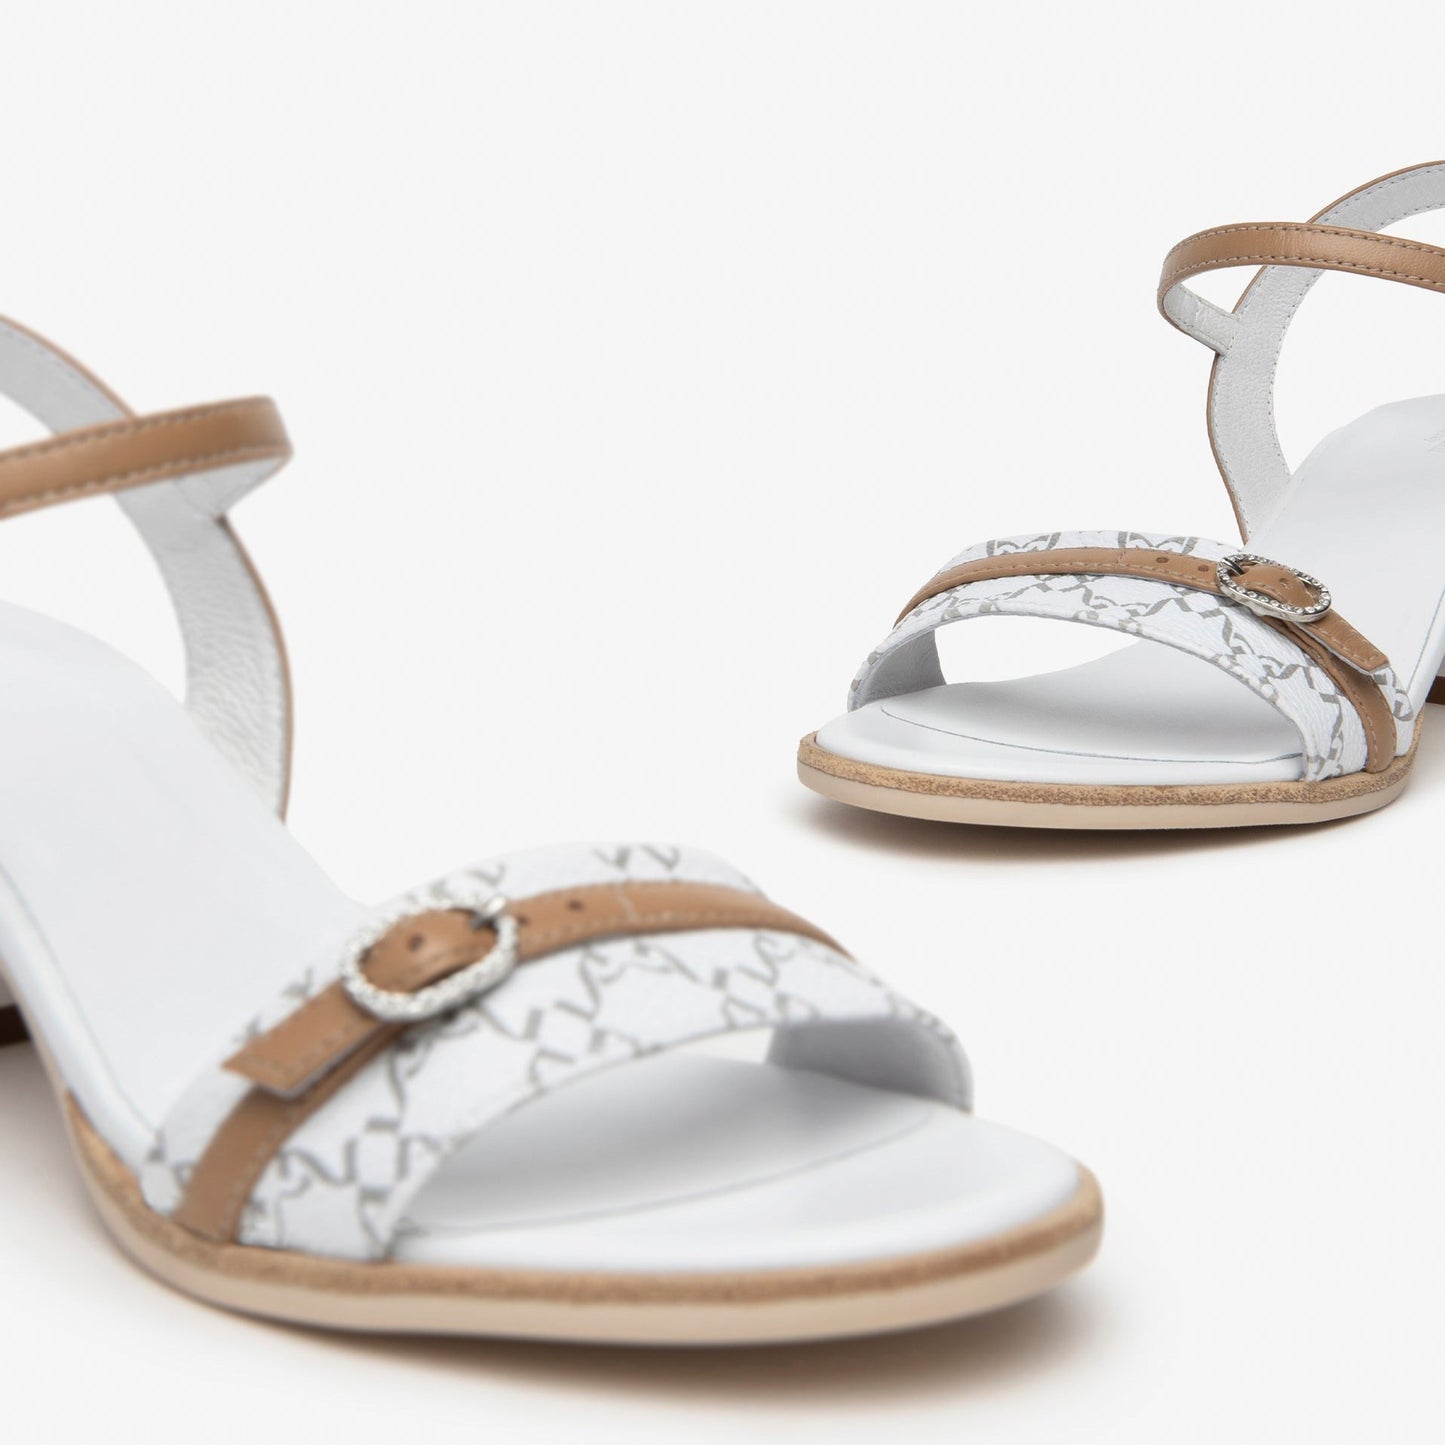 Sandals NeroGiardini women white leather nappa inserts heel